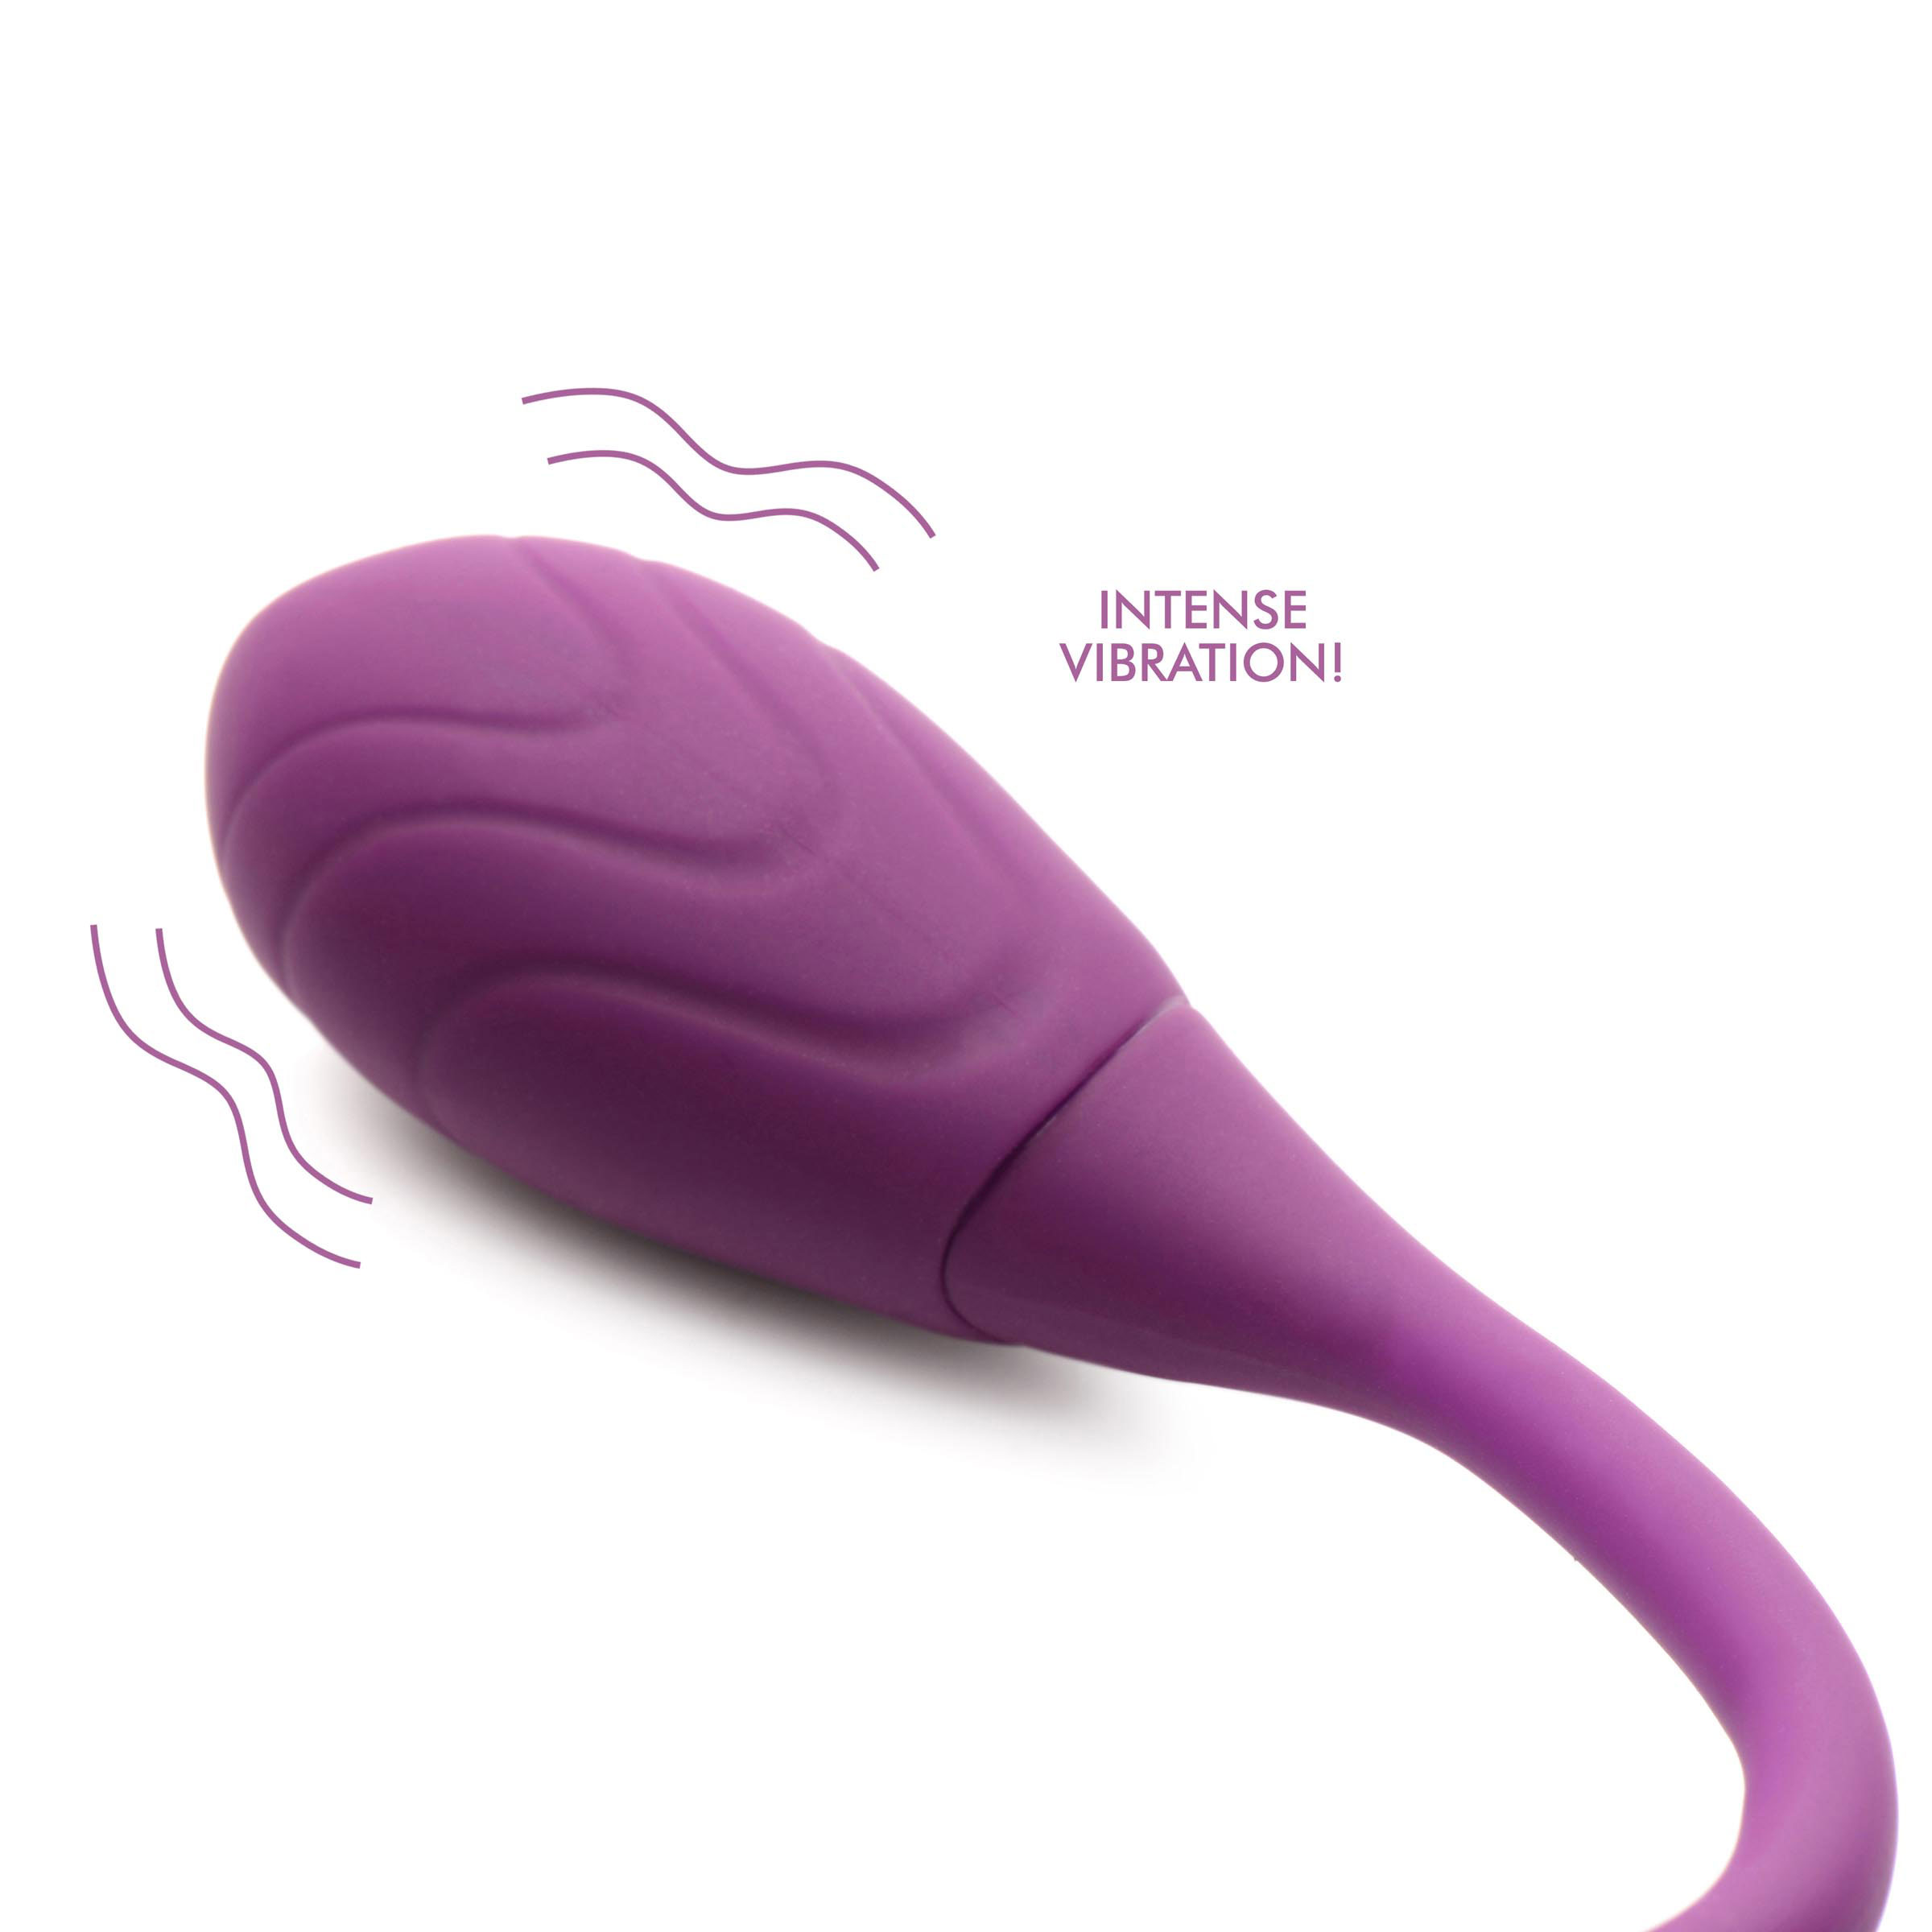 slim pulse x pulsing clit stimulator and  vibrating egg purple 